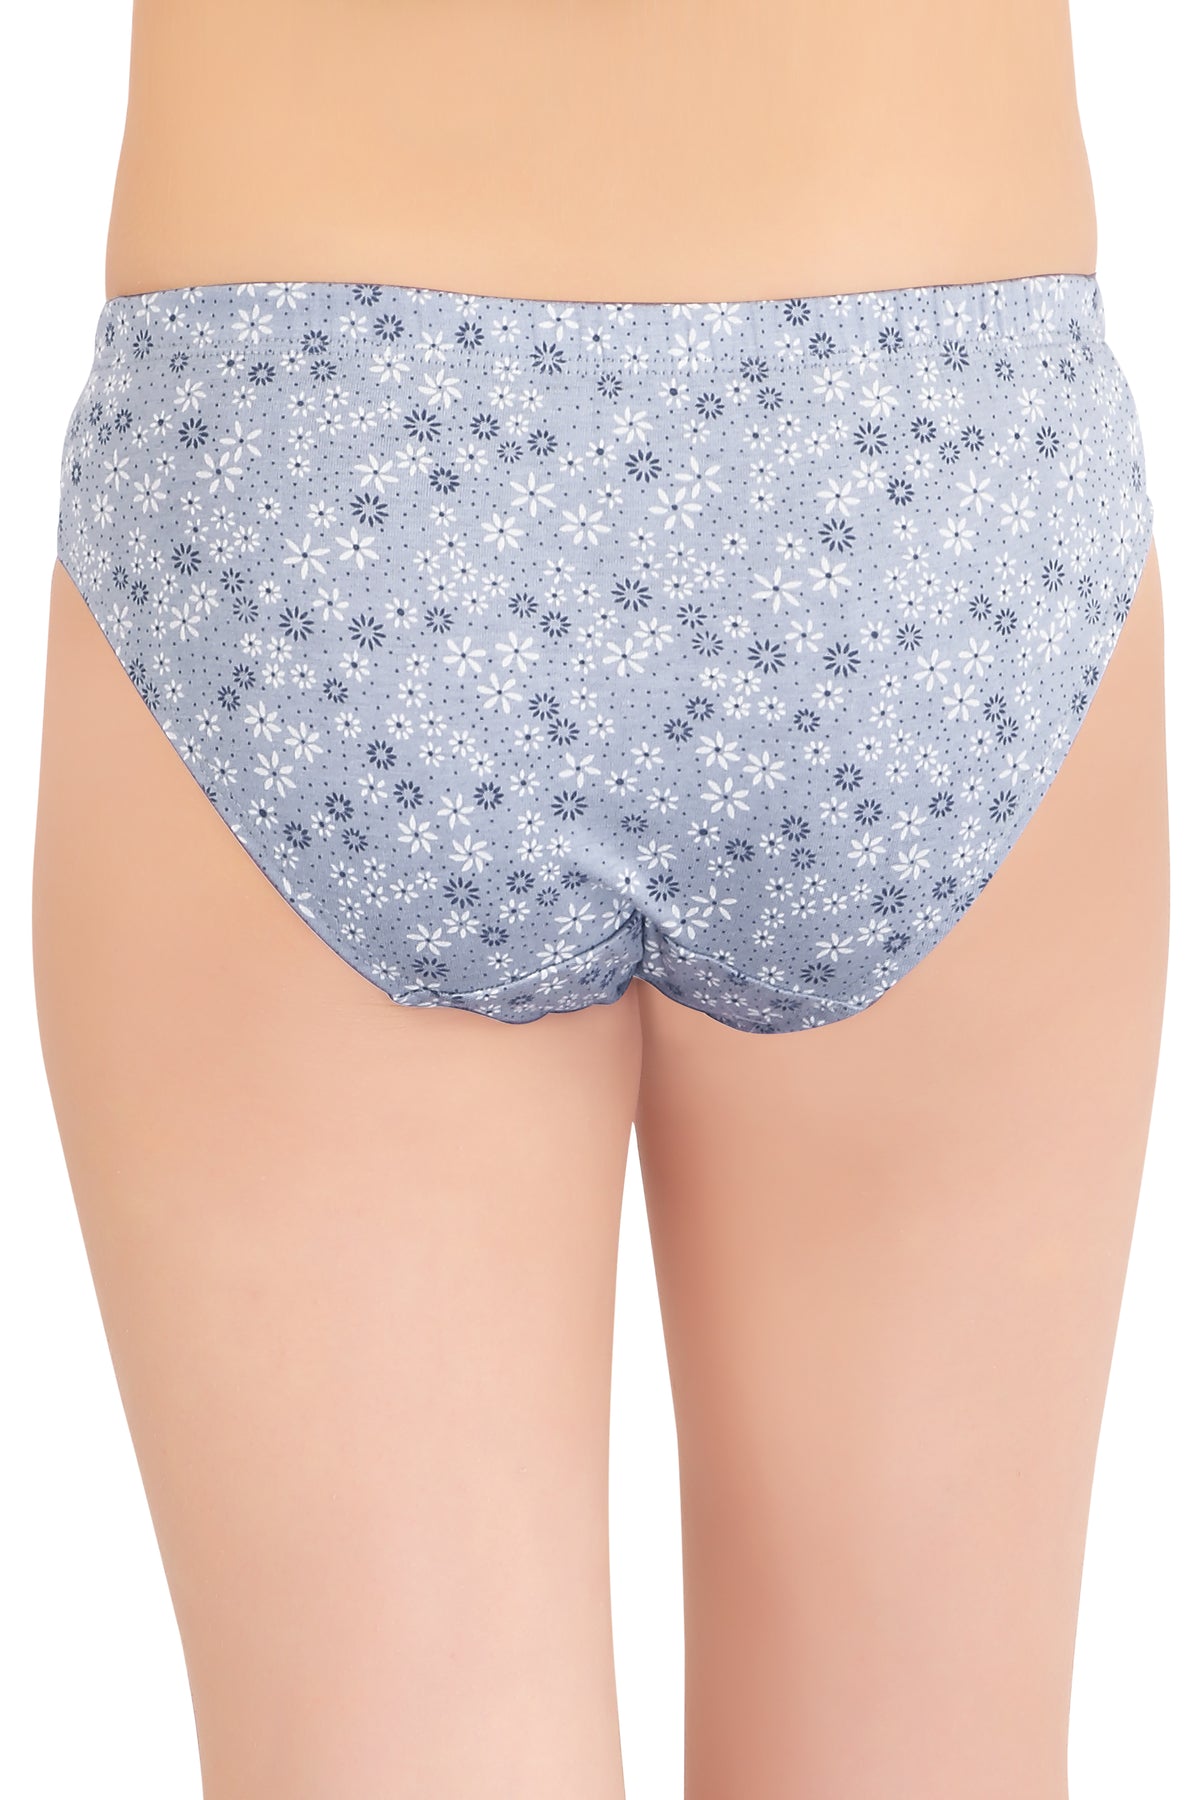 Teen Age/ Kids Girl Printed Cotton Panties